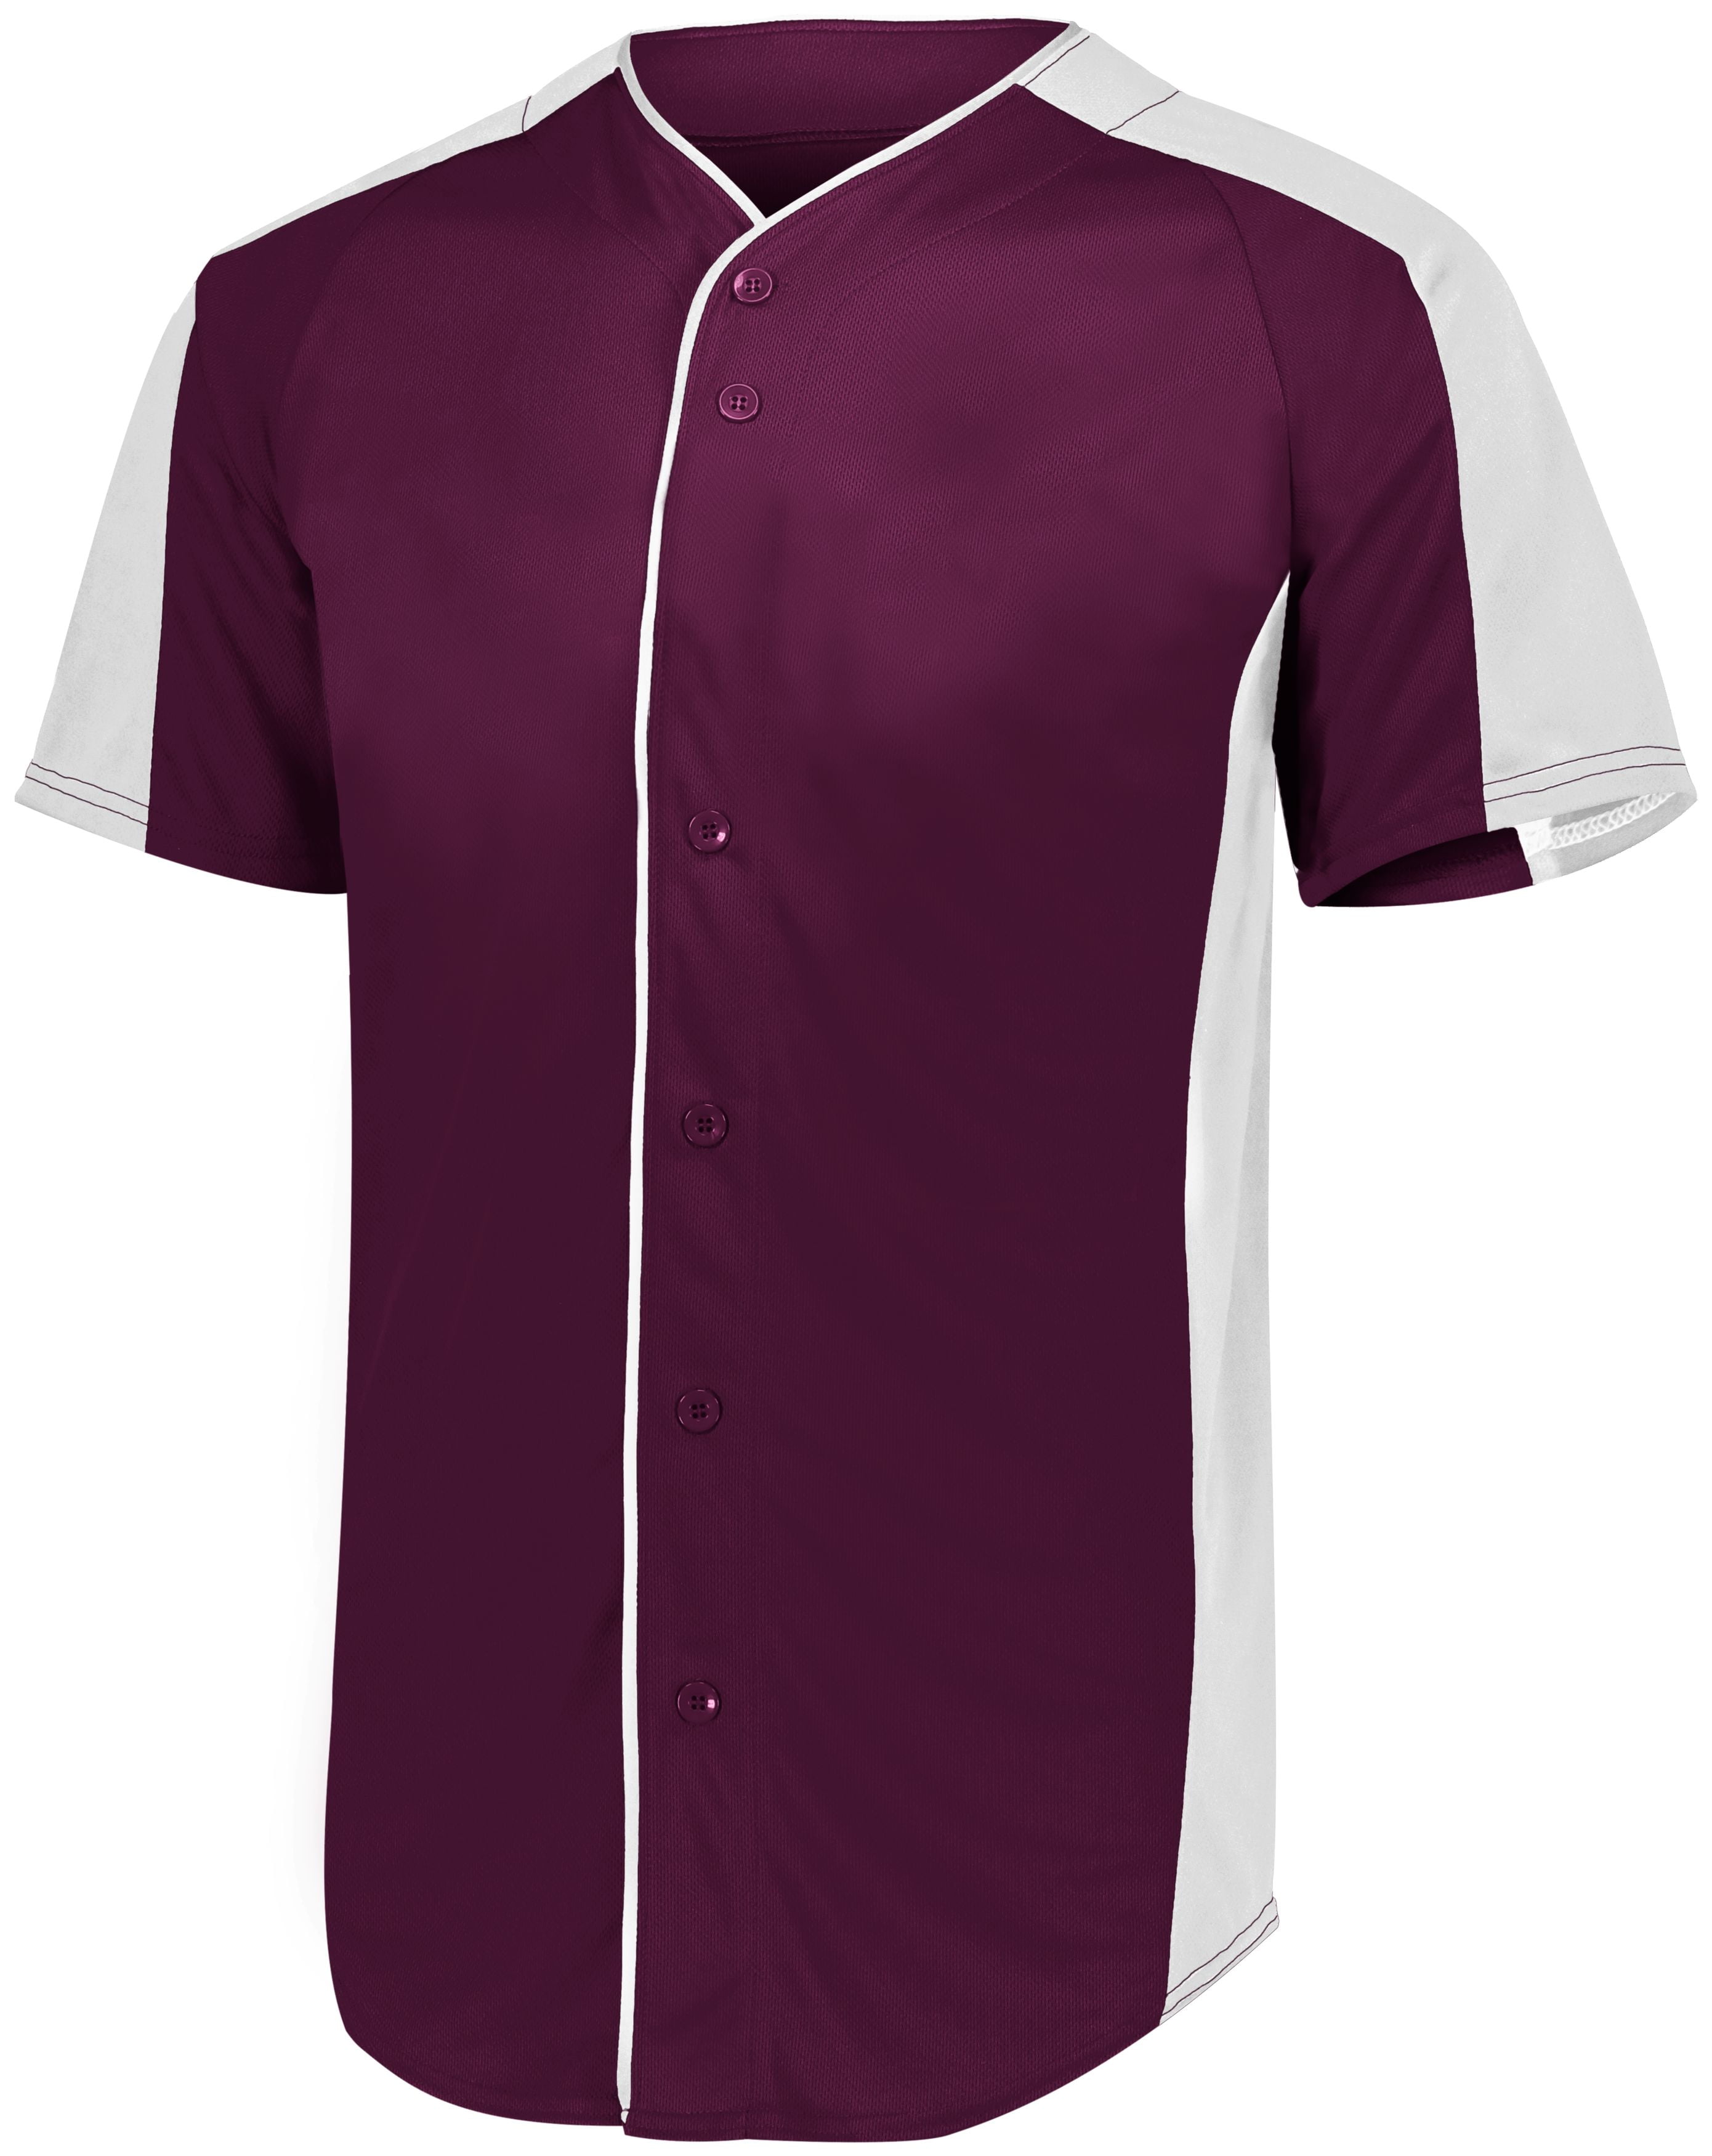 Adult Full-Button Baseball Jersey - MAROON/ WHITE - 2XL